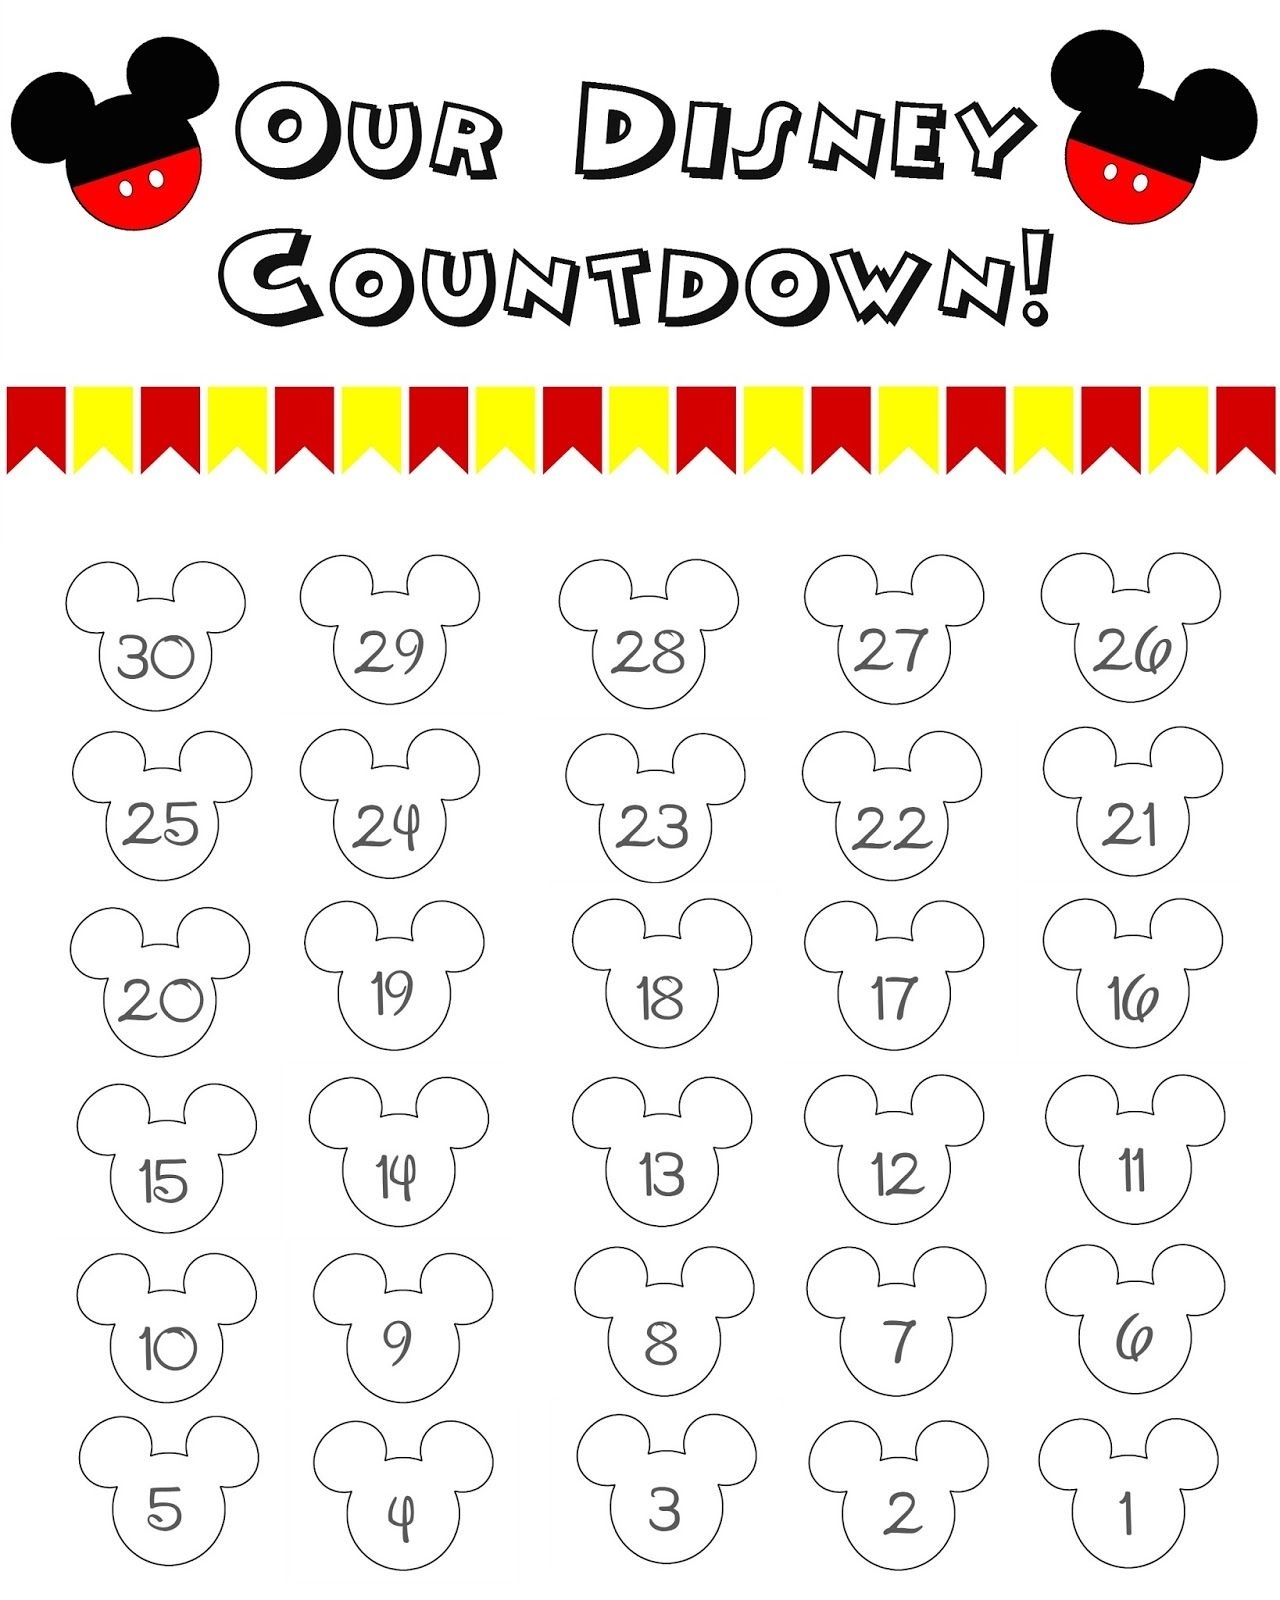 Disney World Countdown Calendar - Free Printable | The Momma Diaries Countdown Calendar Template Printable